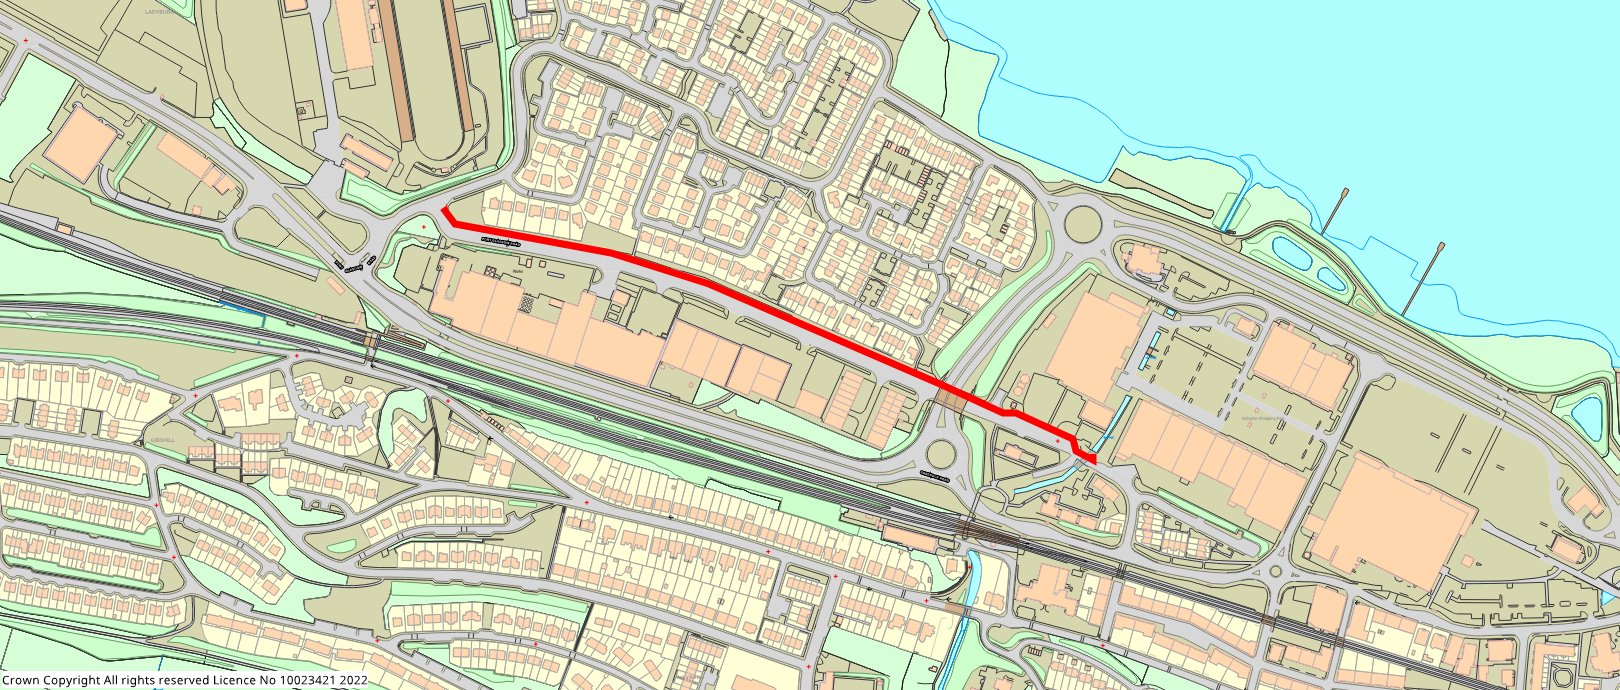 Port Glasgow cycle route to undergo improvements